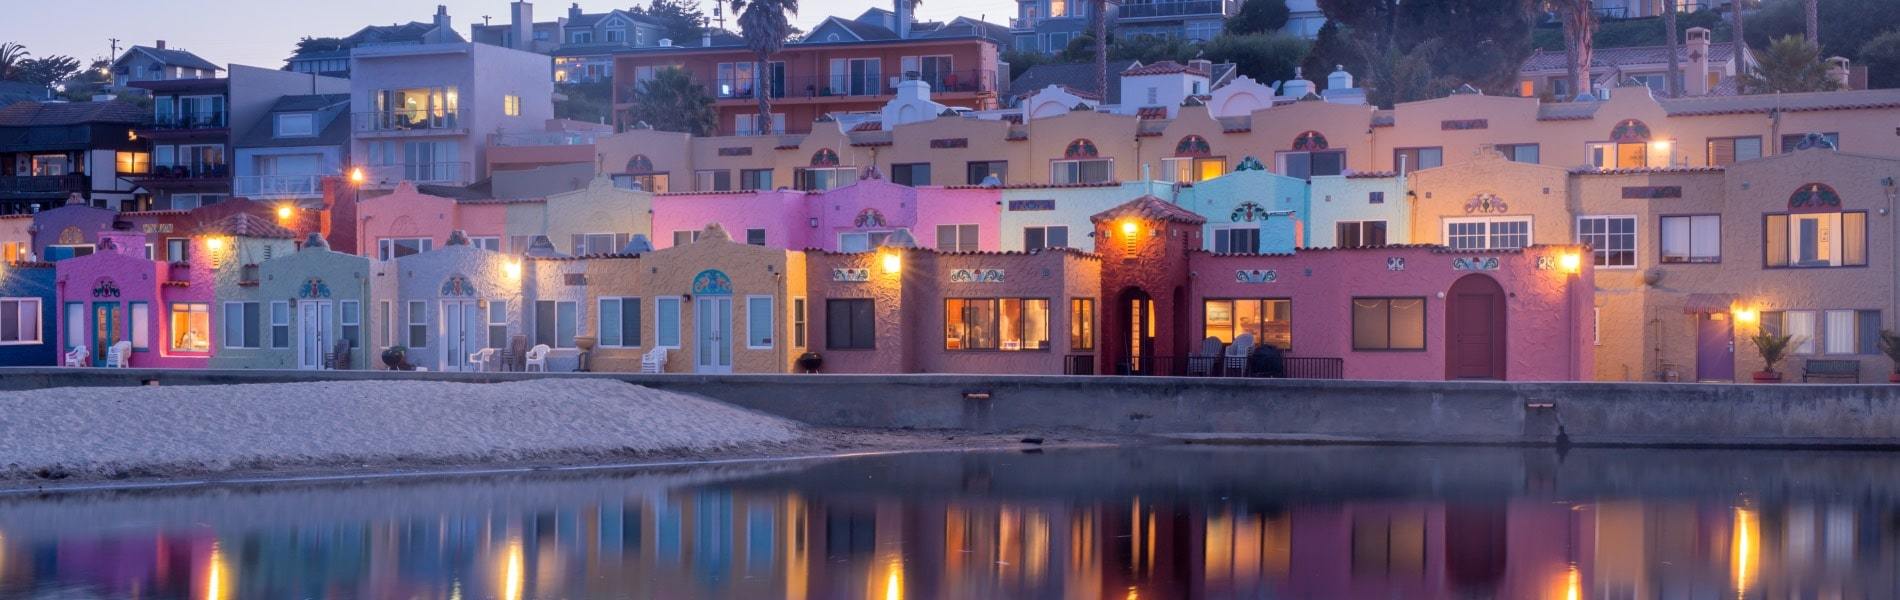 Colorful waterfront homes in Capitola Village, Santa Cruz